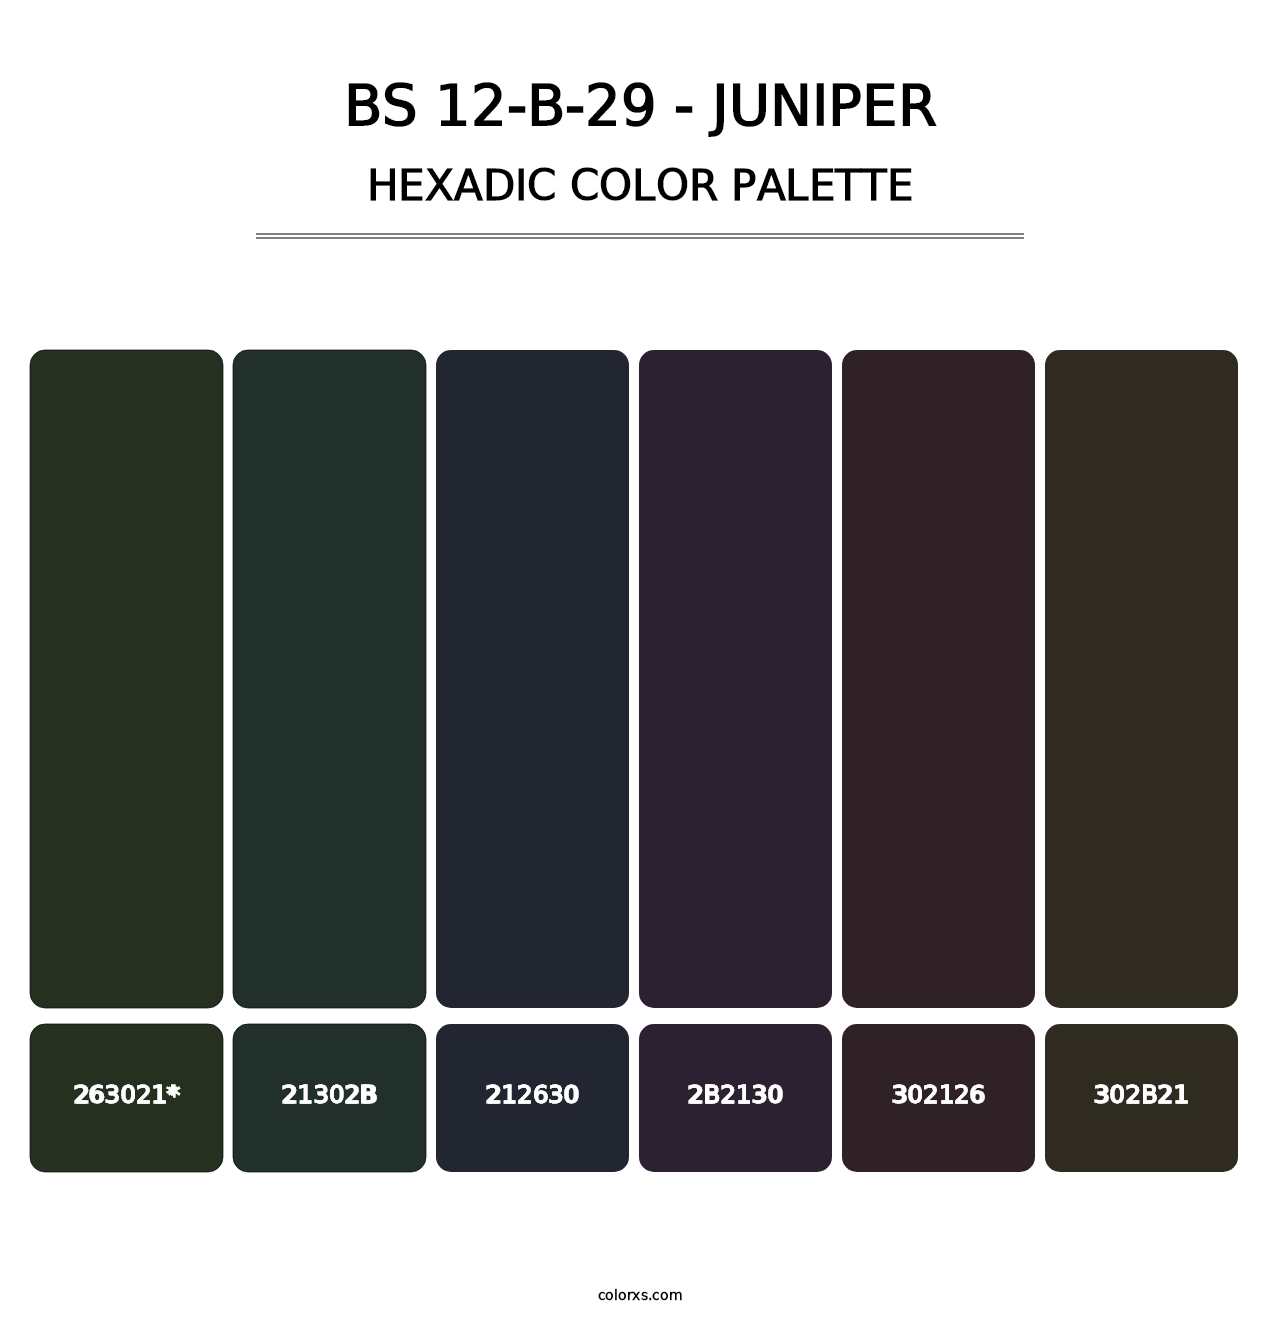 BS 12-B-29 - Juniper - Hexadic Color Palette